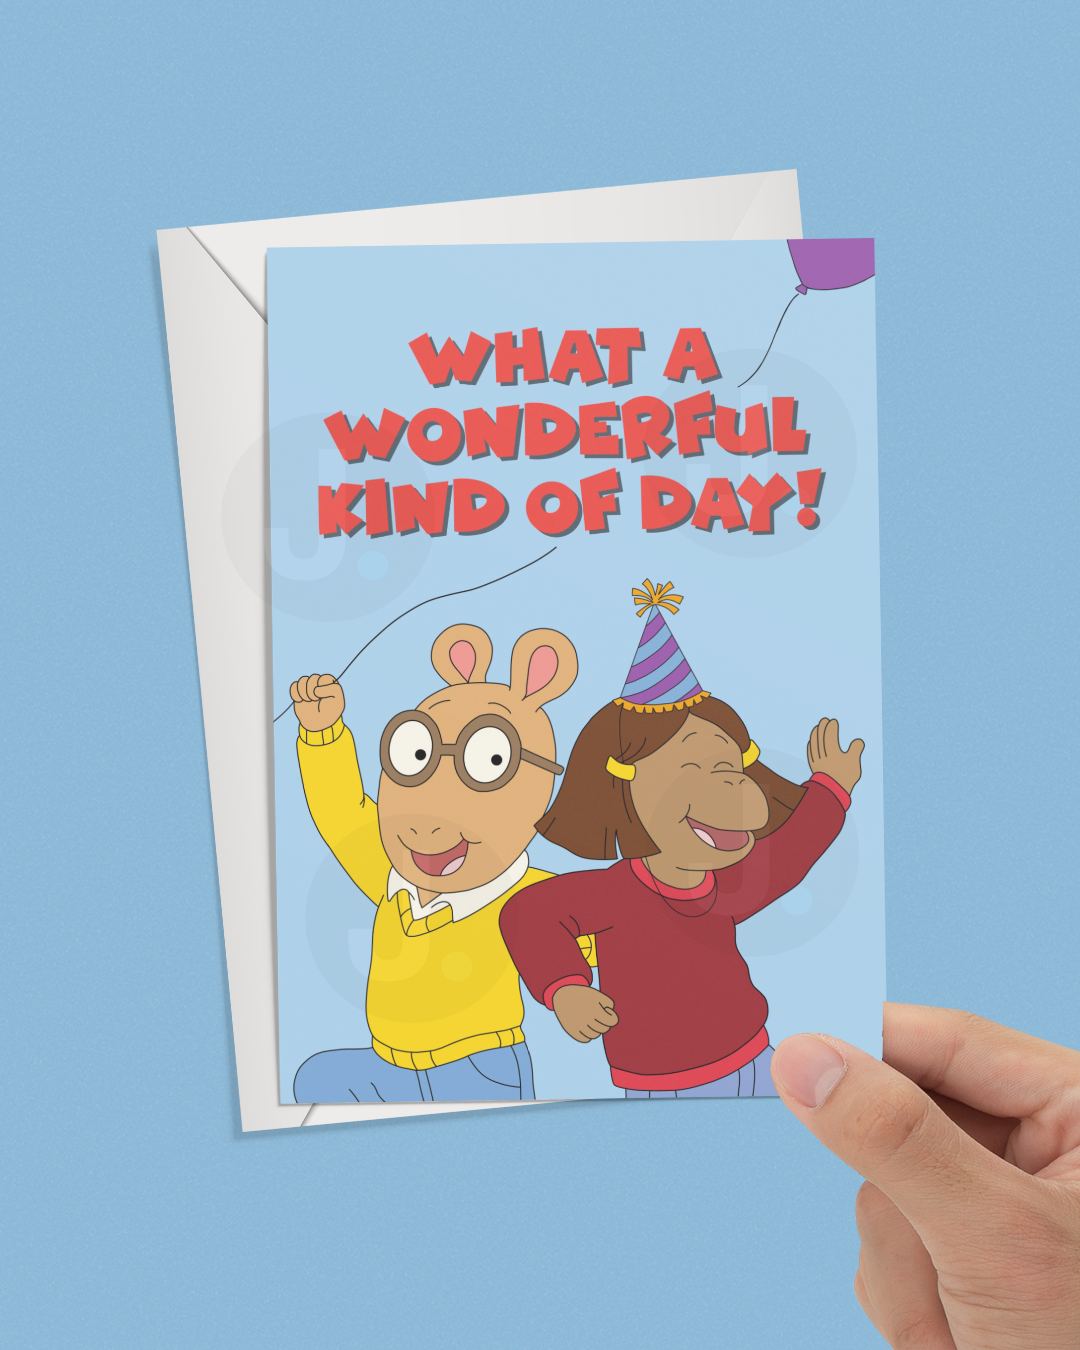 Have A Wonderful Kind Of Day! Card -1990s Cartoon Arthur Inspired Birthday Card - Arthur Inspired Birthday Card